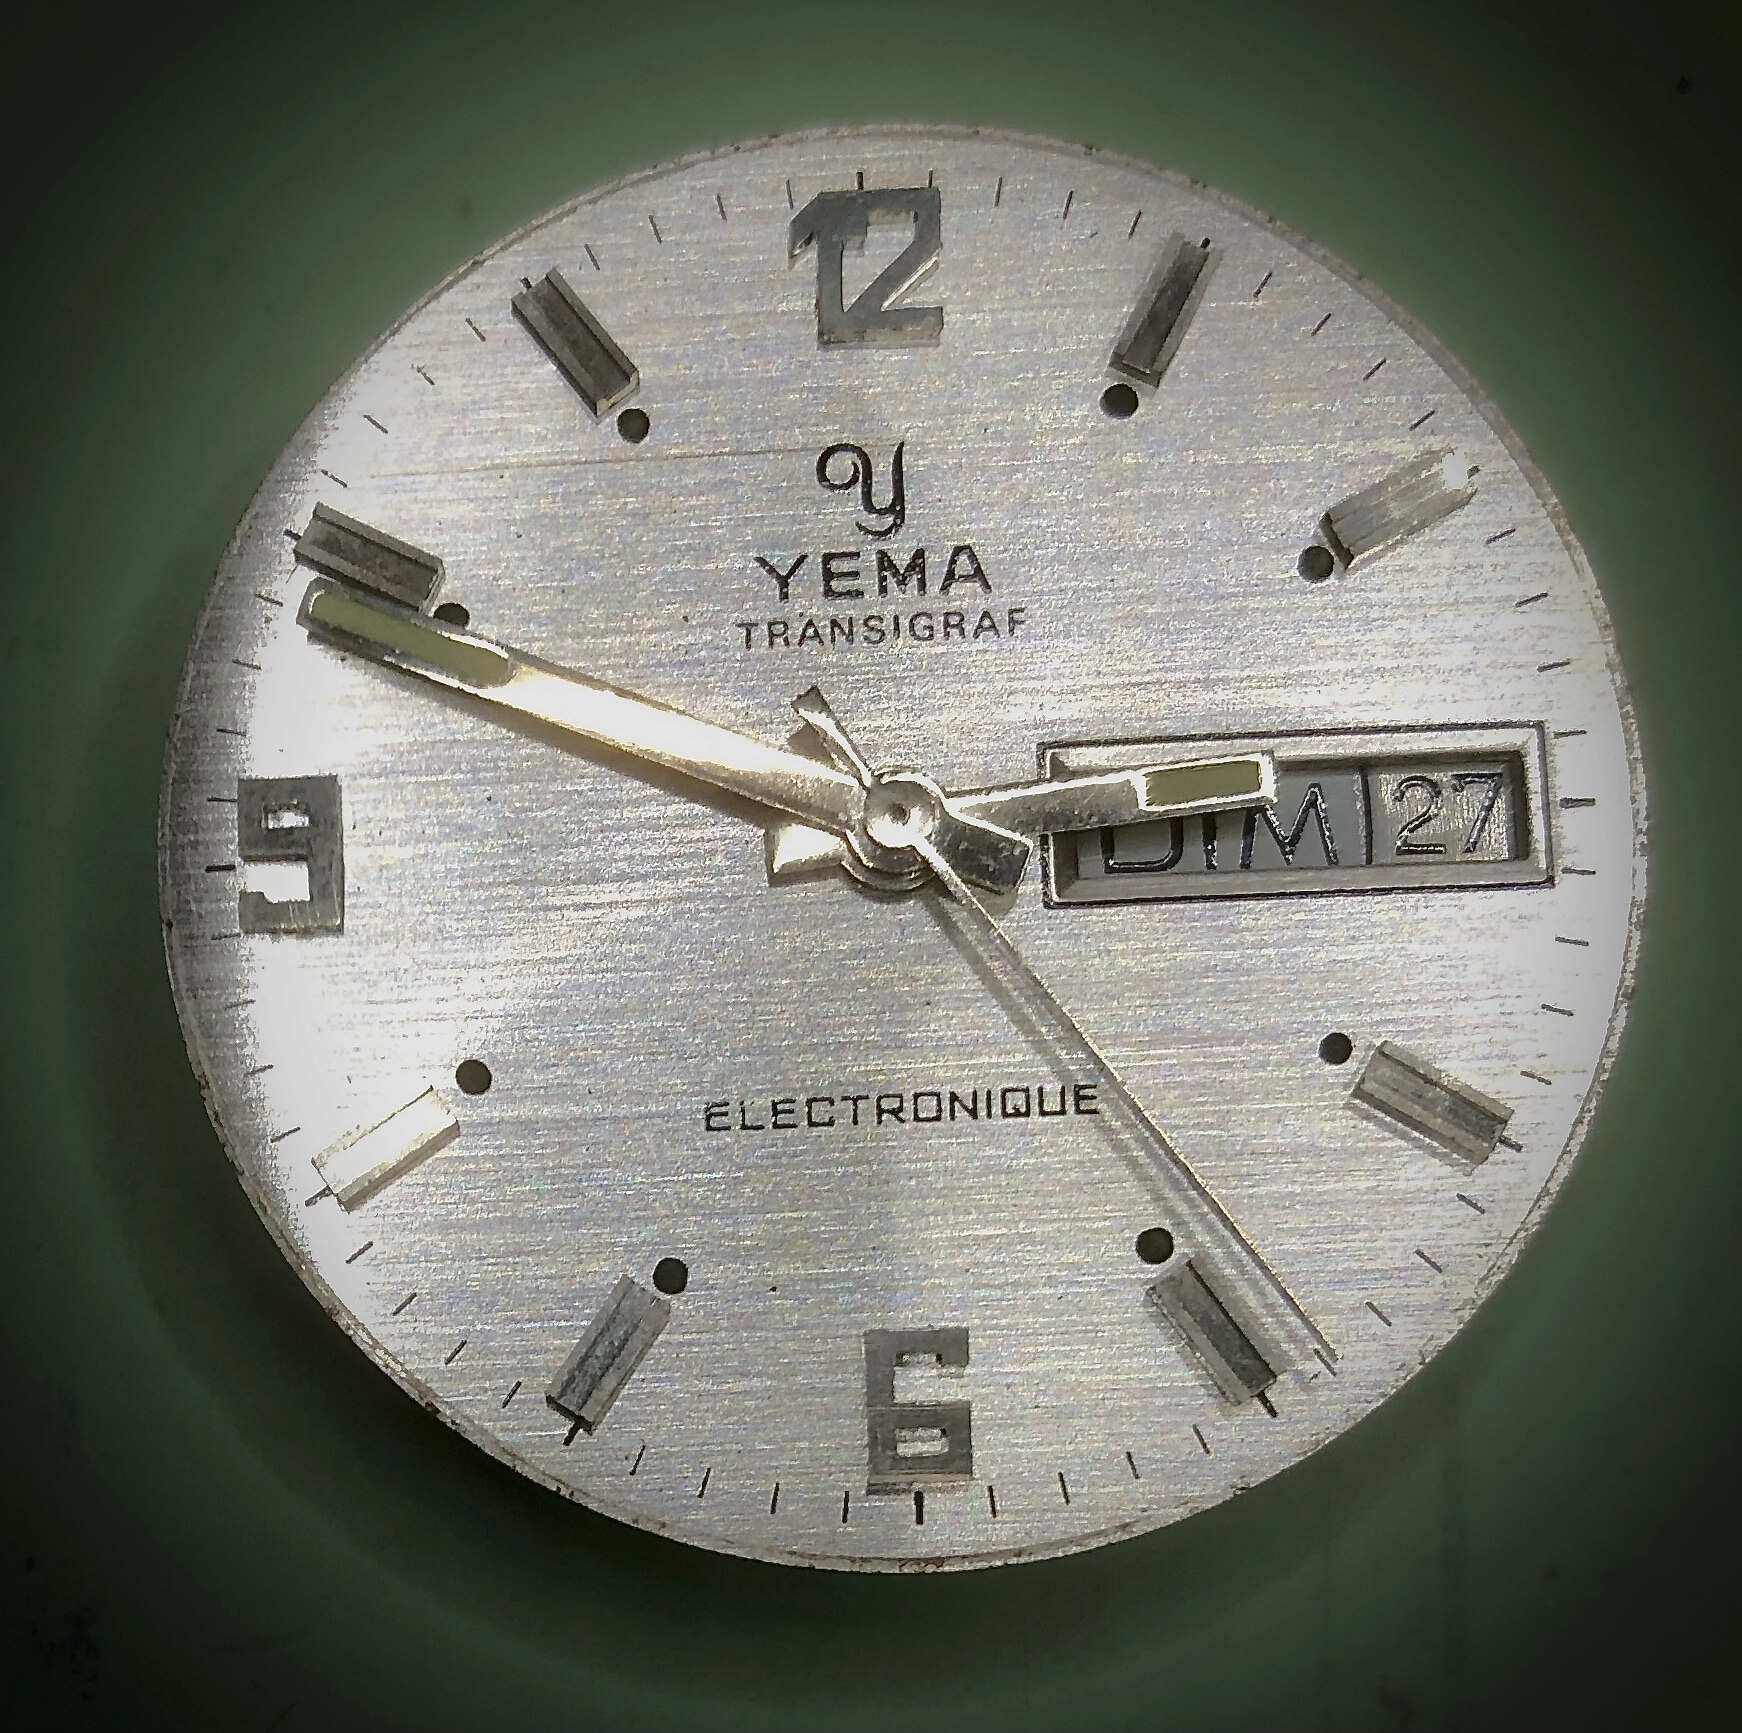 Yema - Yema Transigraf D6441710